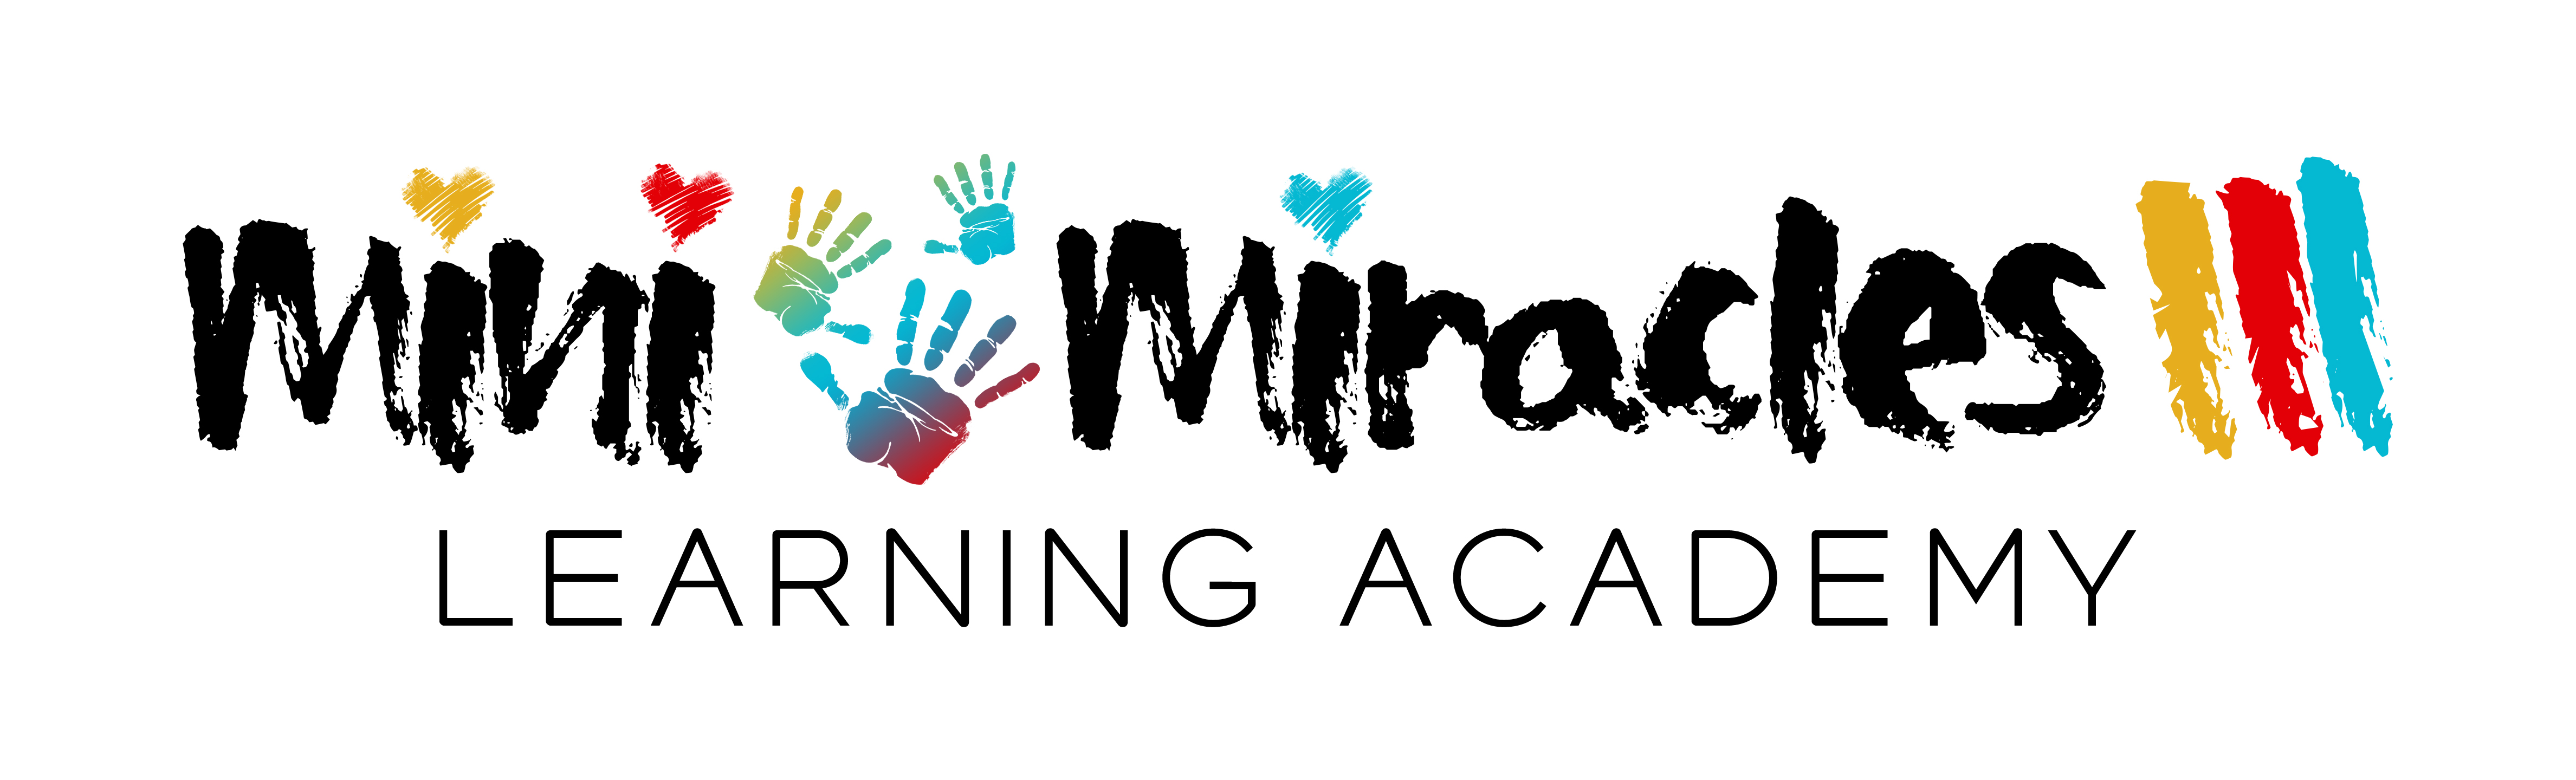 Mini Miracles III Learning Academy logo